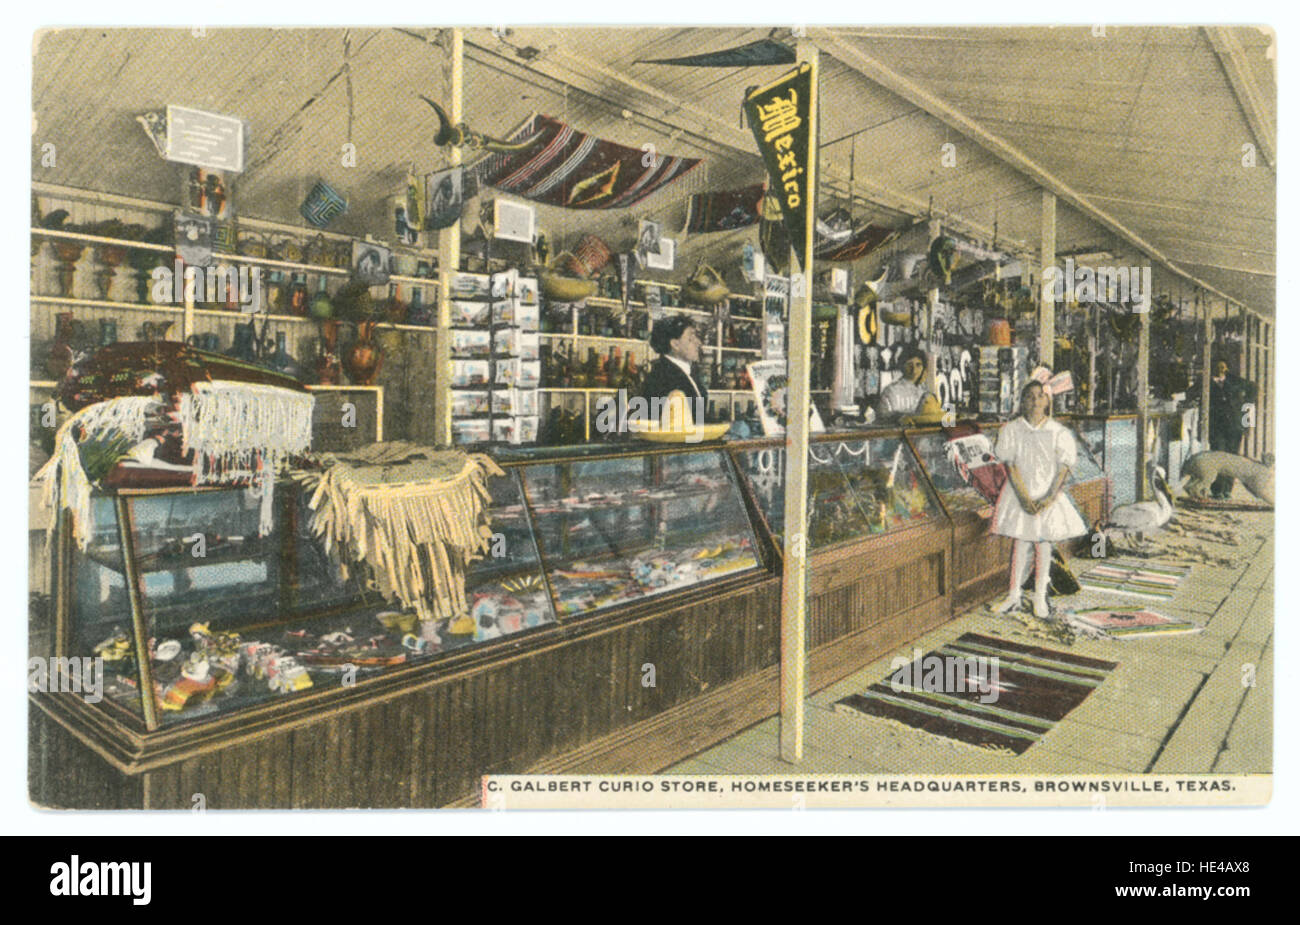 C Galbert Curio Store, Homeseeker's Headquarters, Brownsville, Texas Stock Photo